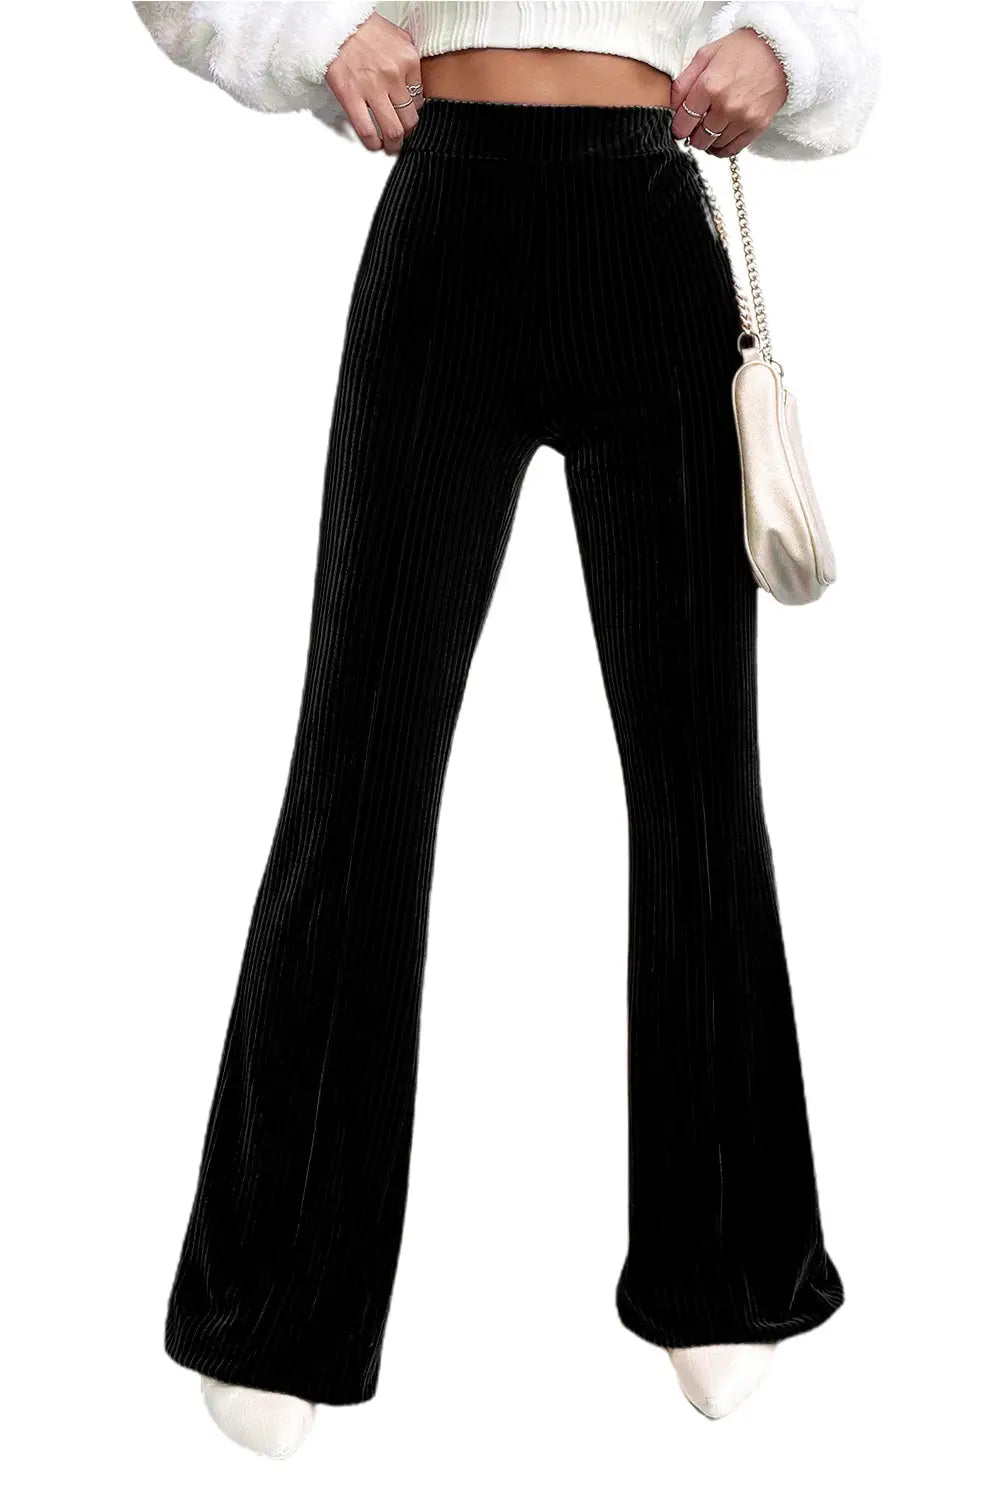 Black solid color high waist flare corduroy pants - wide leg